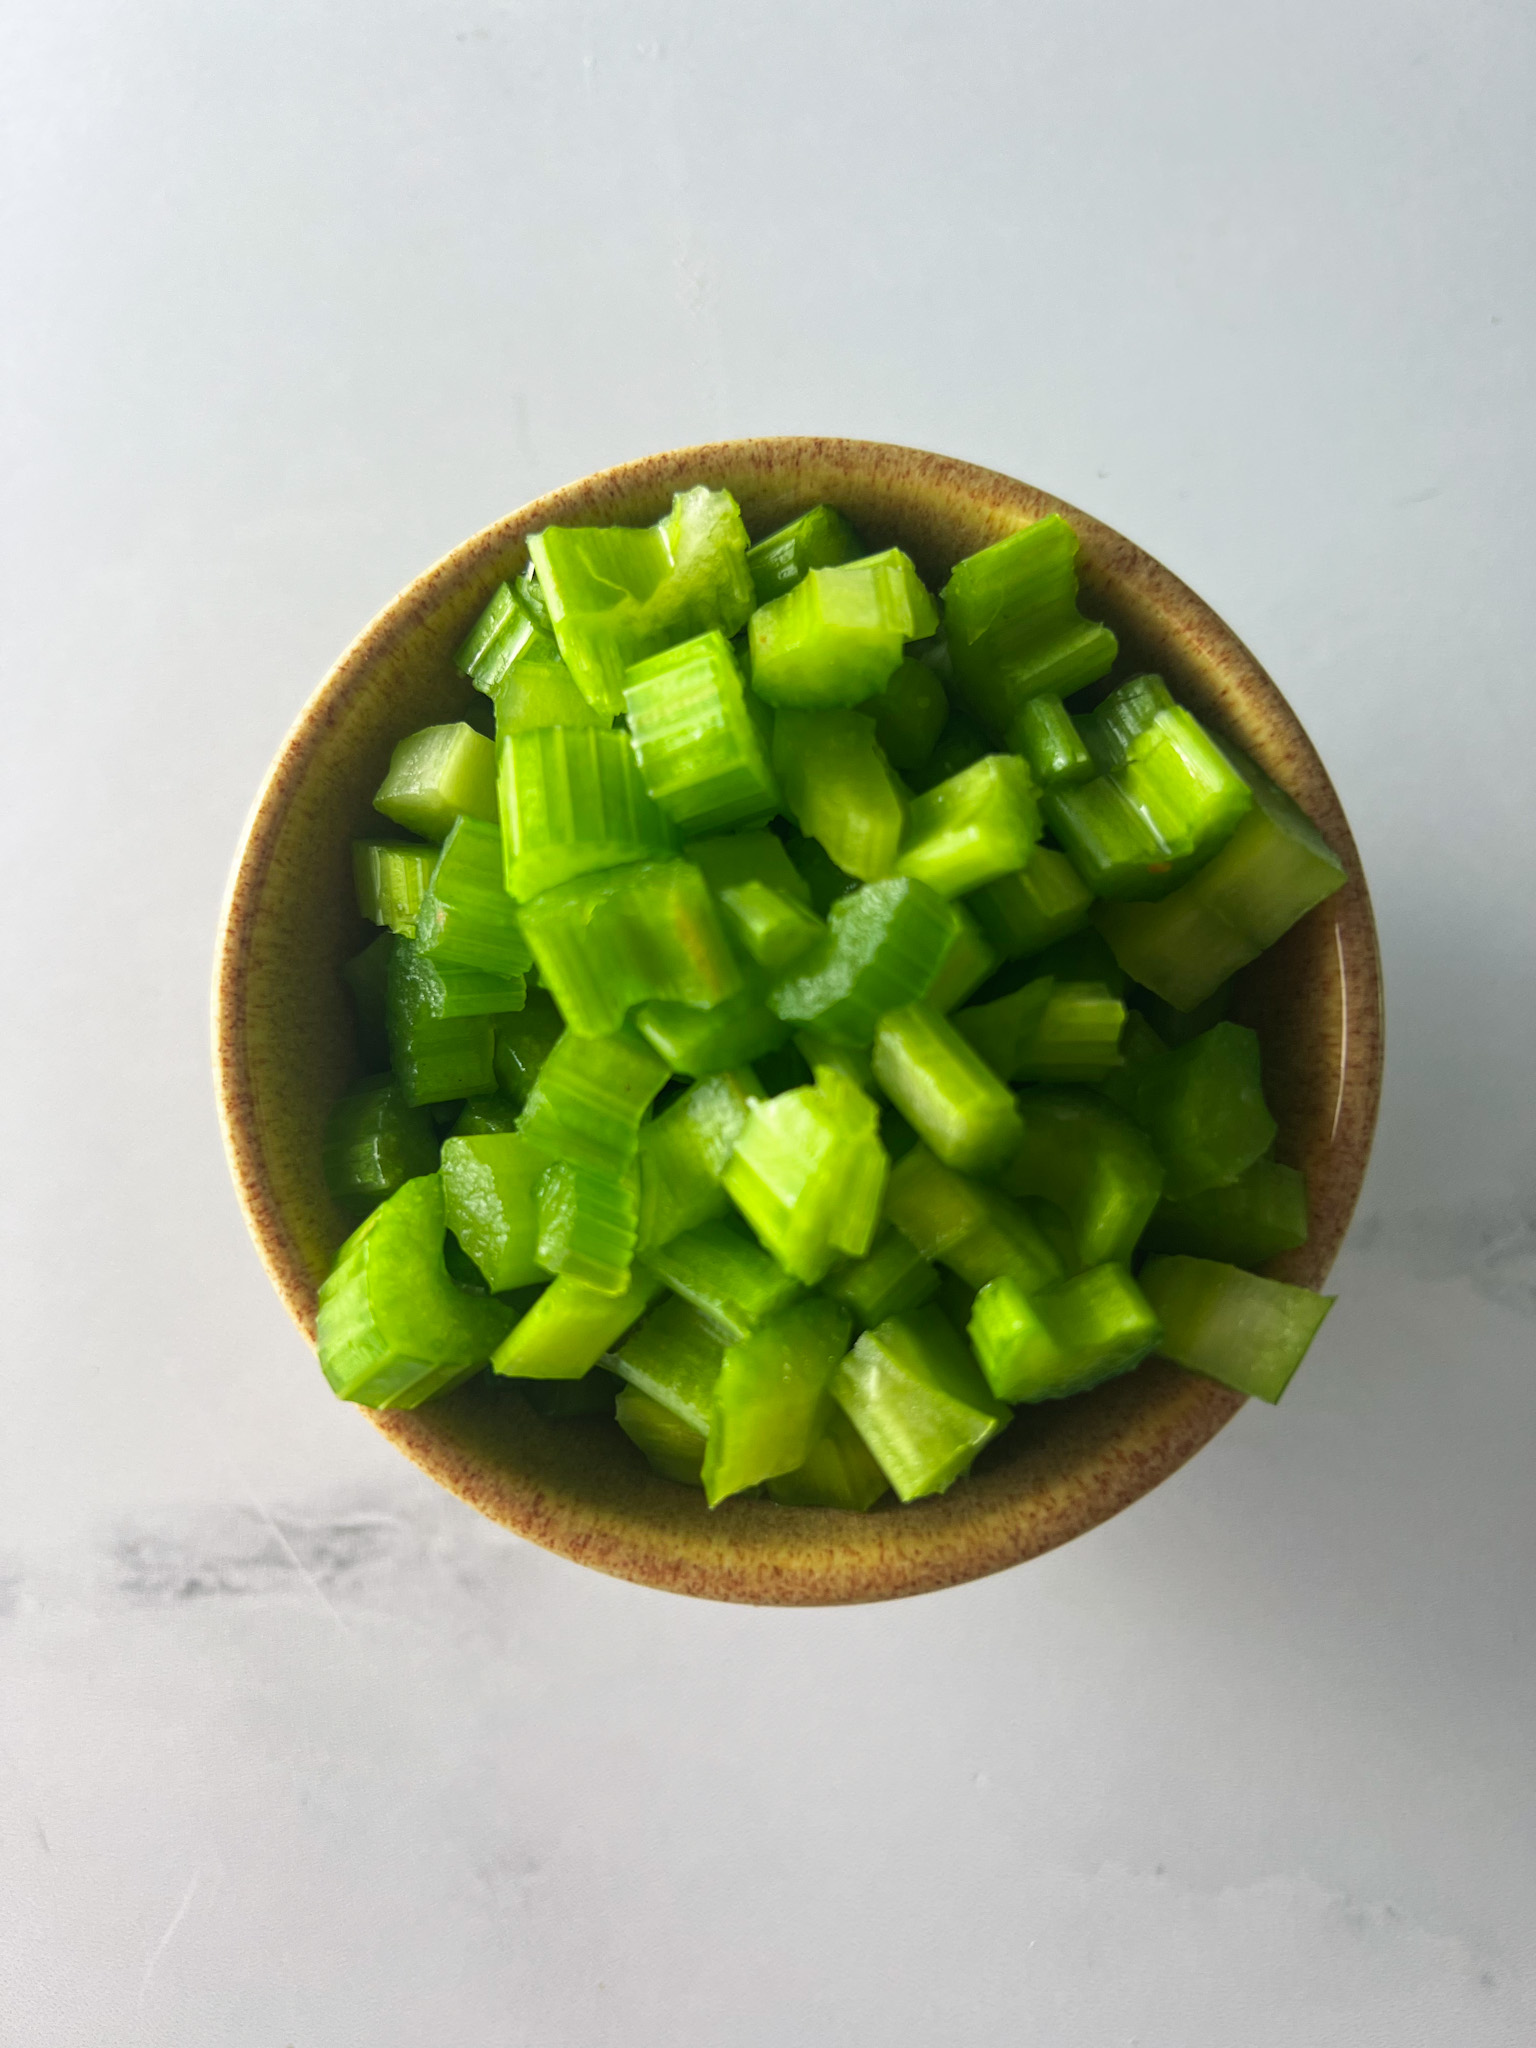 https://www.theperksofbeingus.com/panera-10-vegetable-soup/chopped-celery-in-a-bowl/